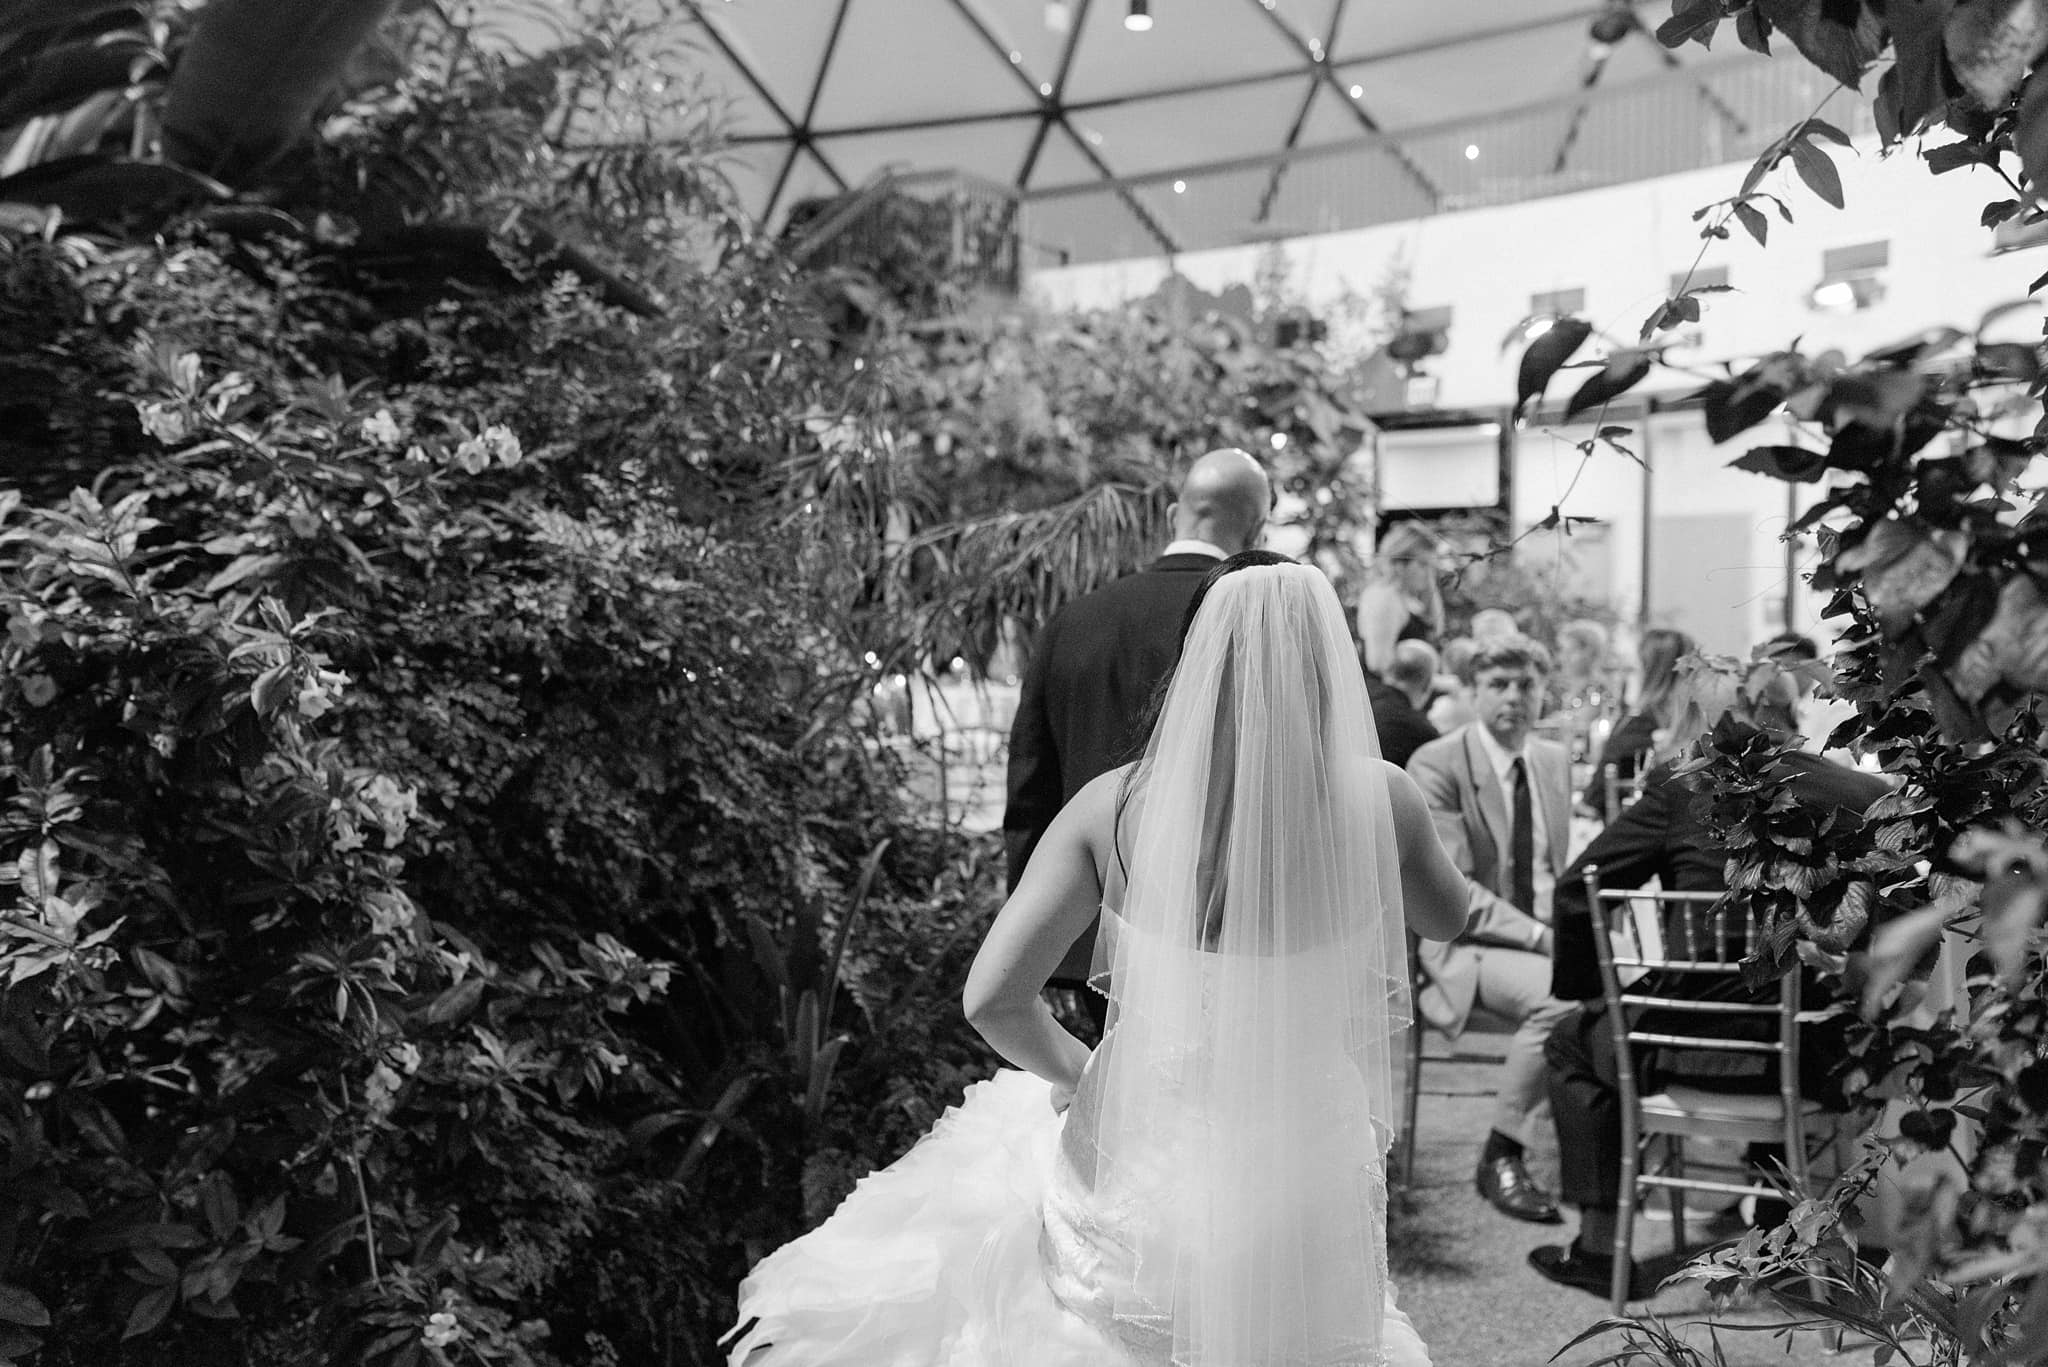 Wedding at the Des Moines Botanical Center